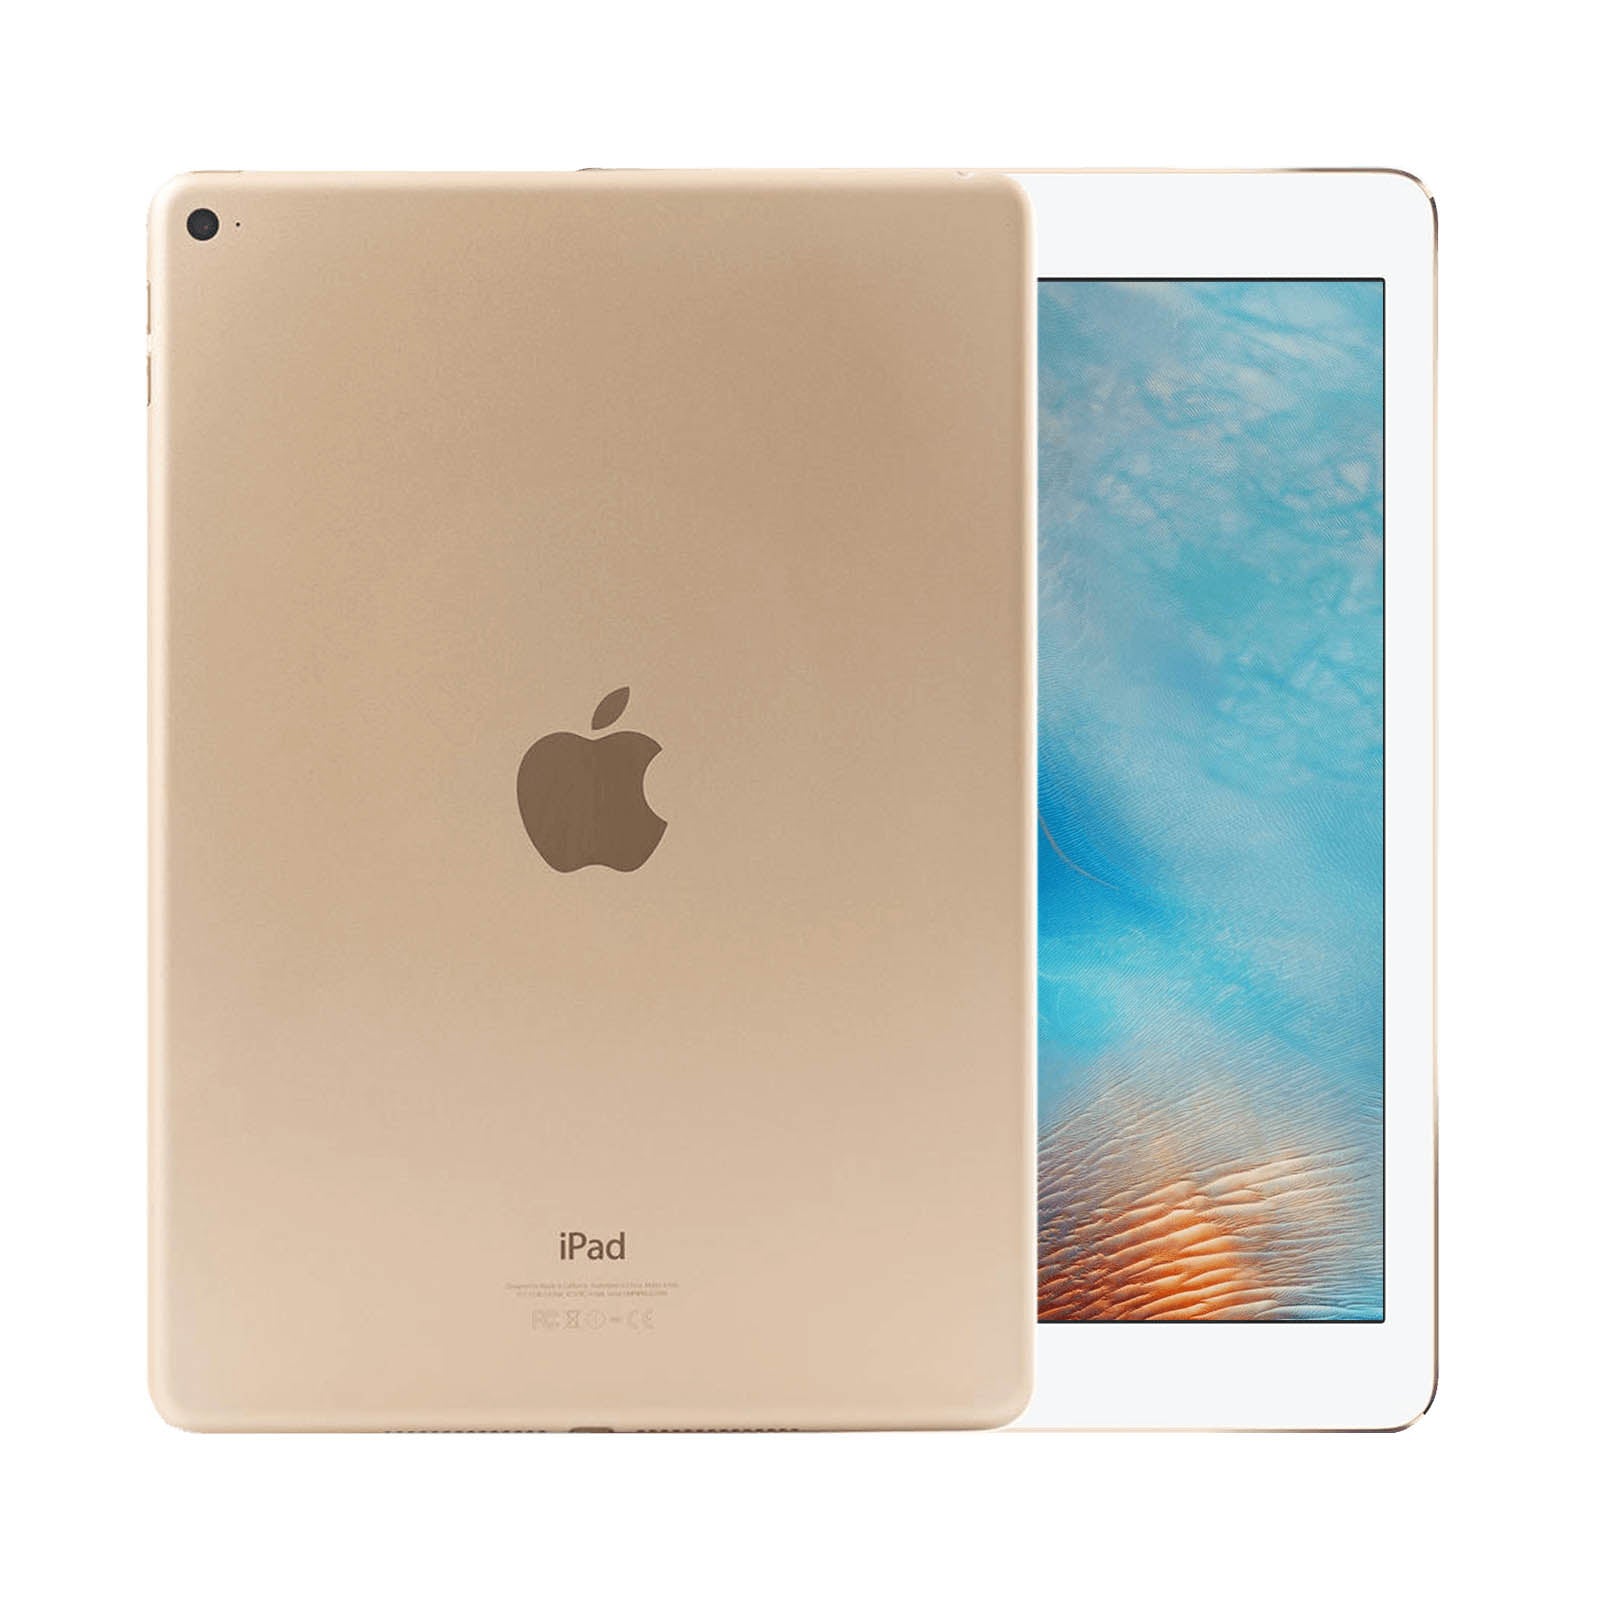 Apple iPad Air 2 16GB Gold Very Good - WiFi